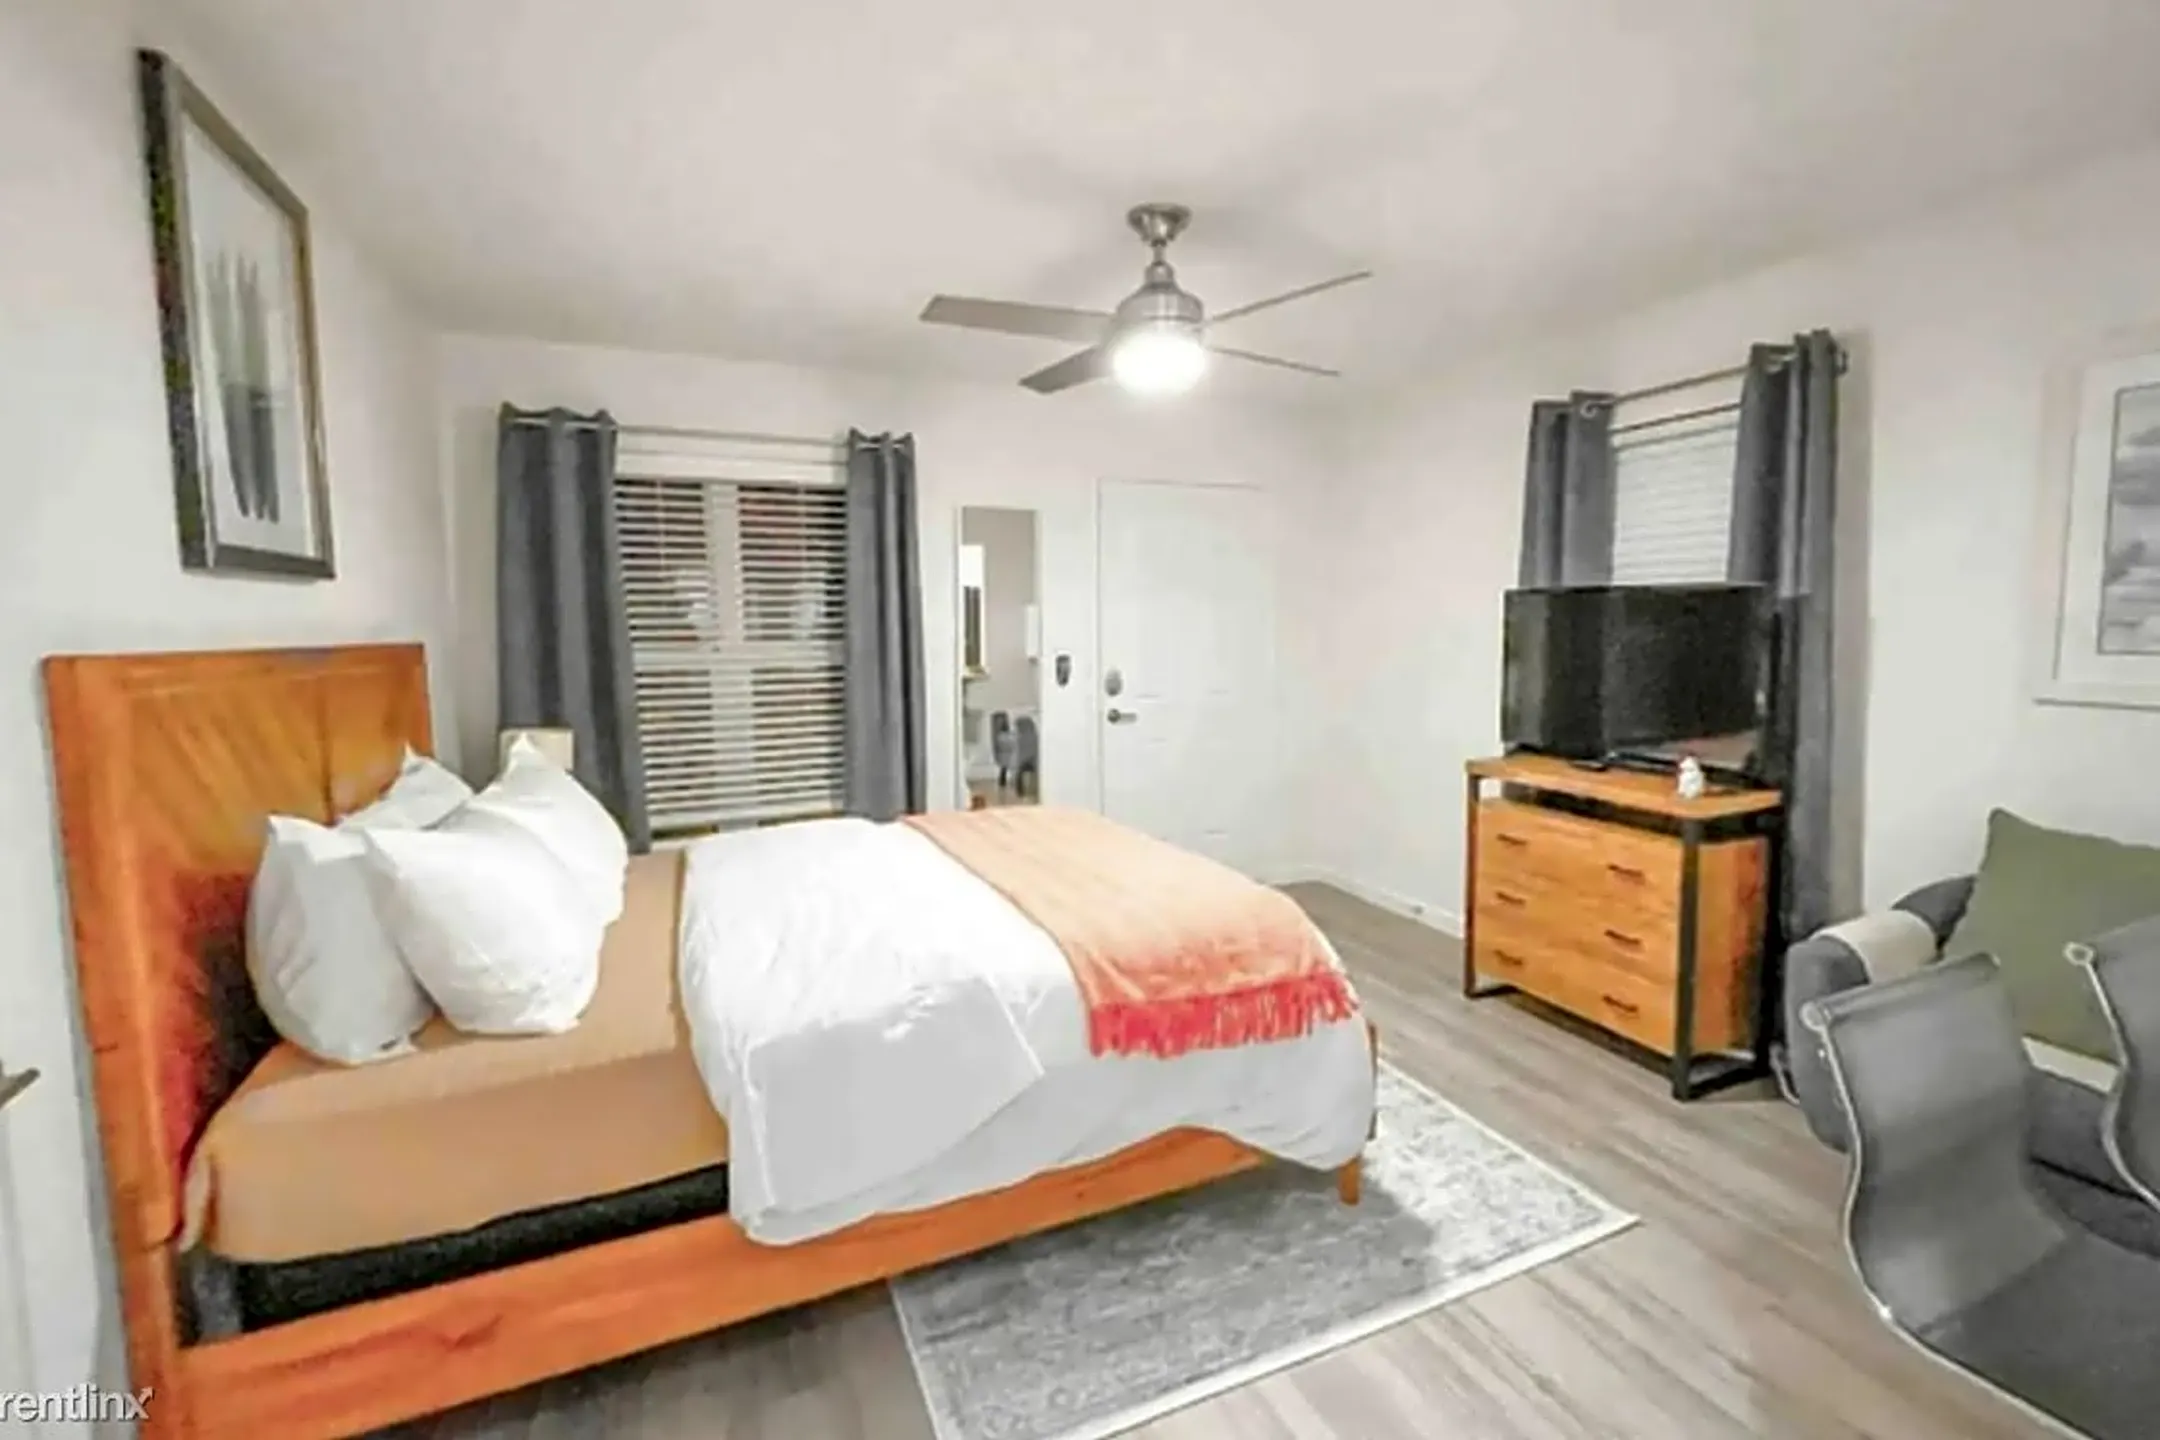 Bedroom - 4706 Tremont St - Dallas, TX